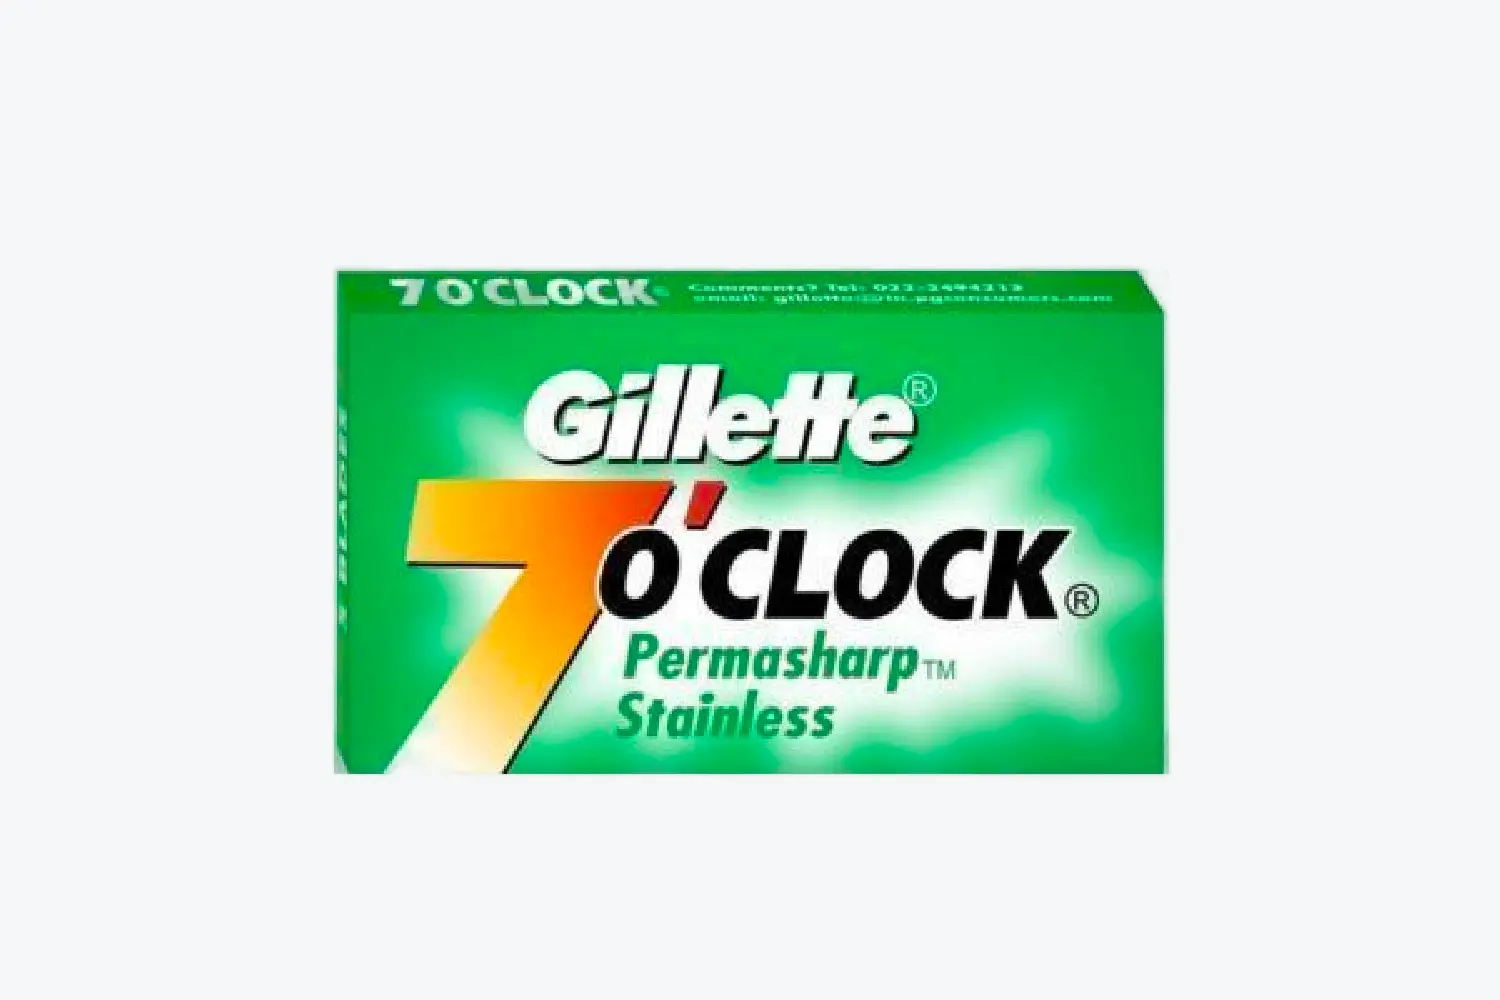 gillette 7 oclock razor blades